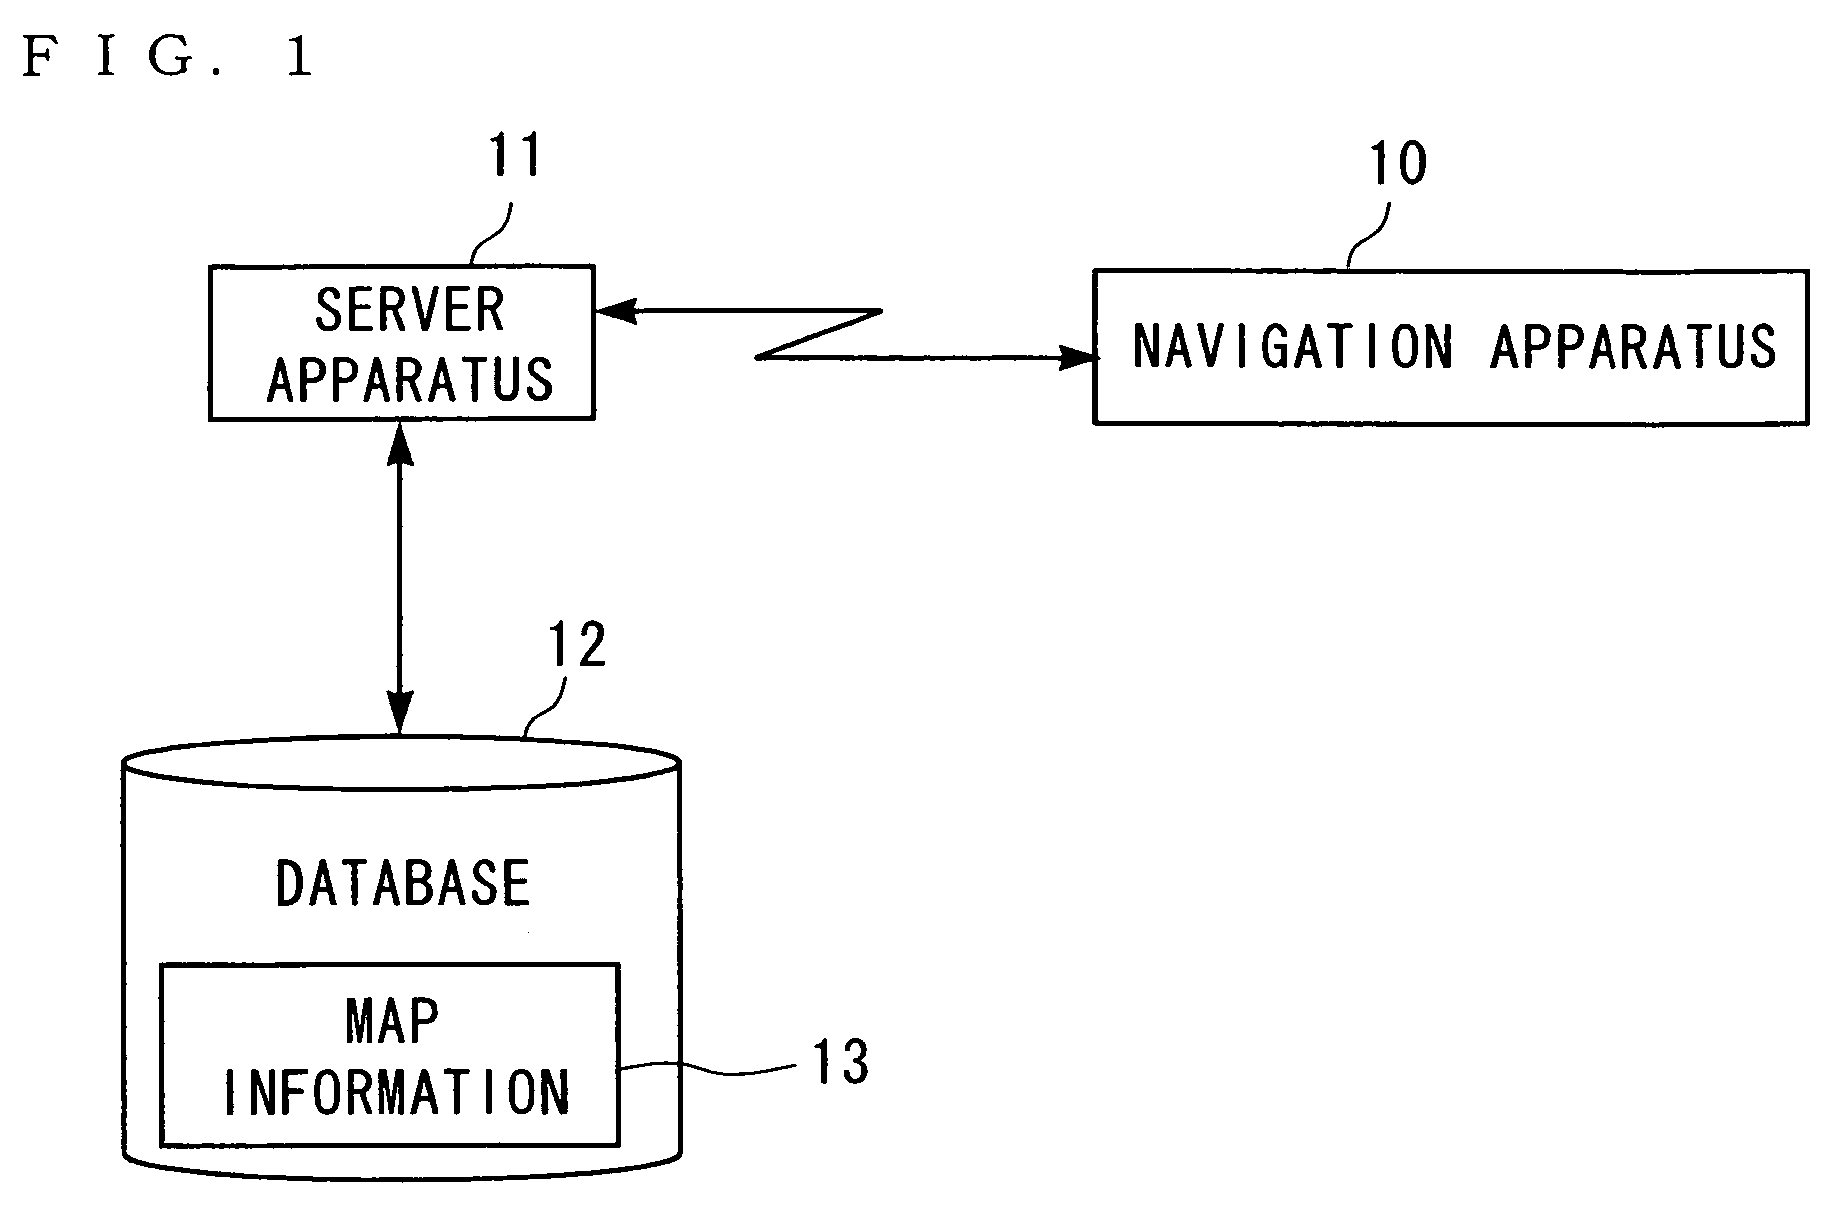 Navigation apparatus and server apparatus